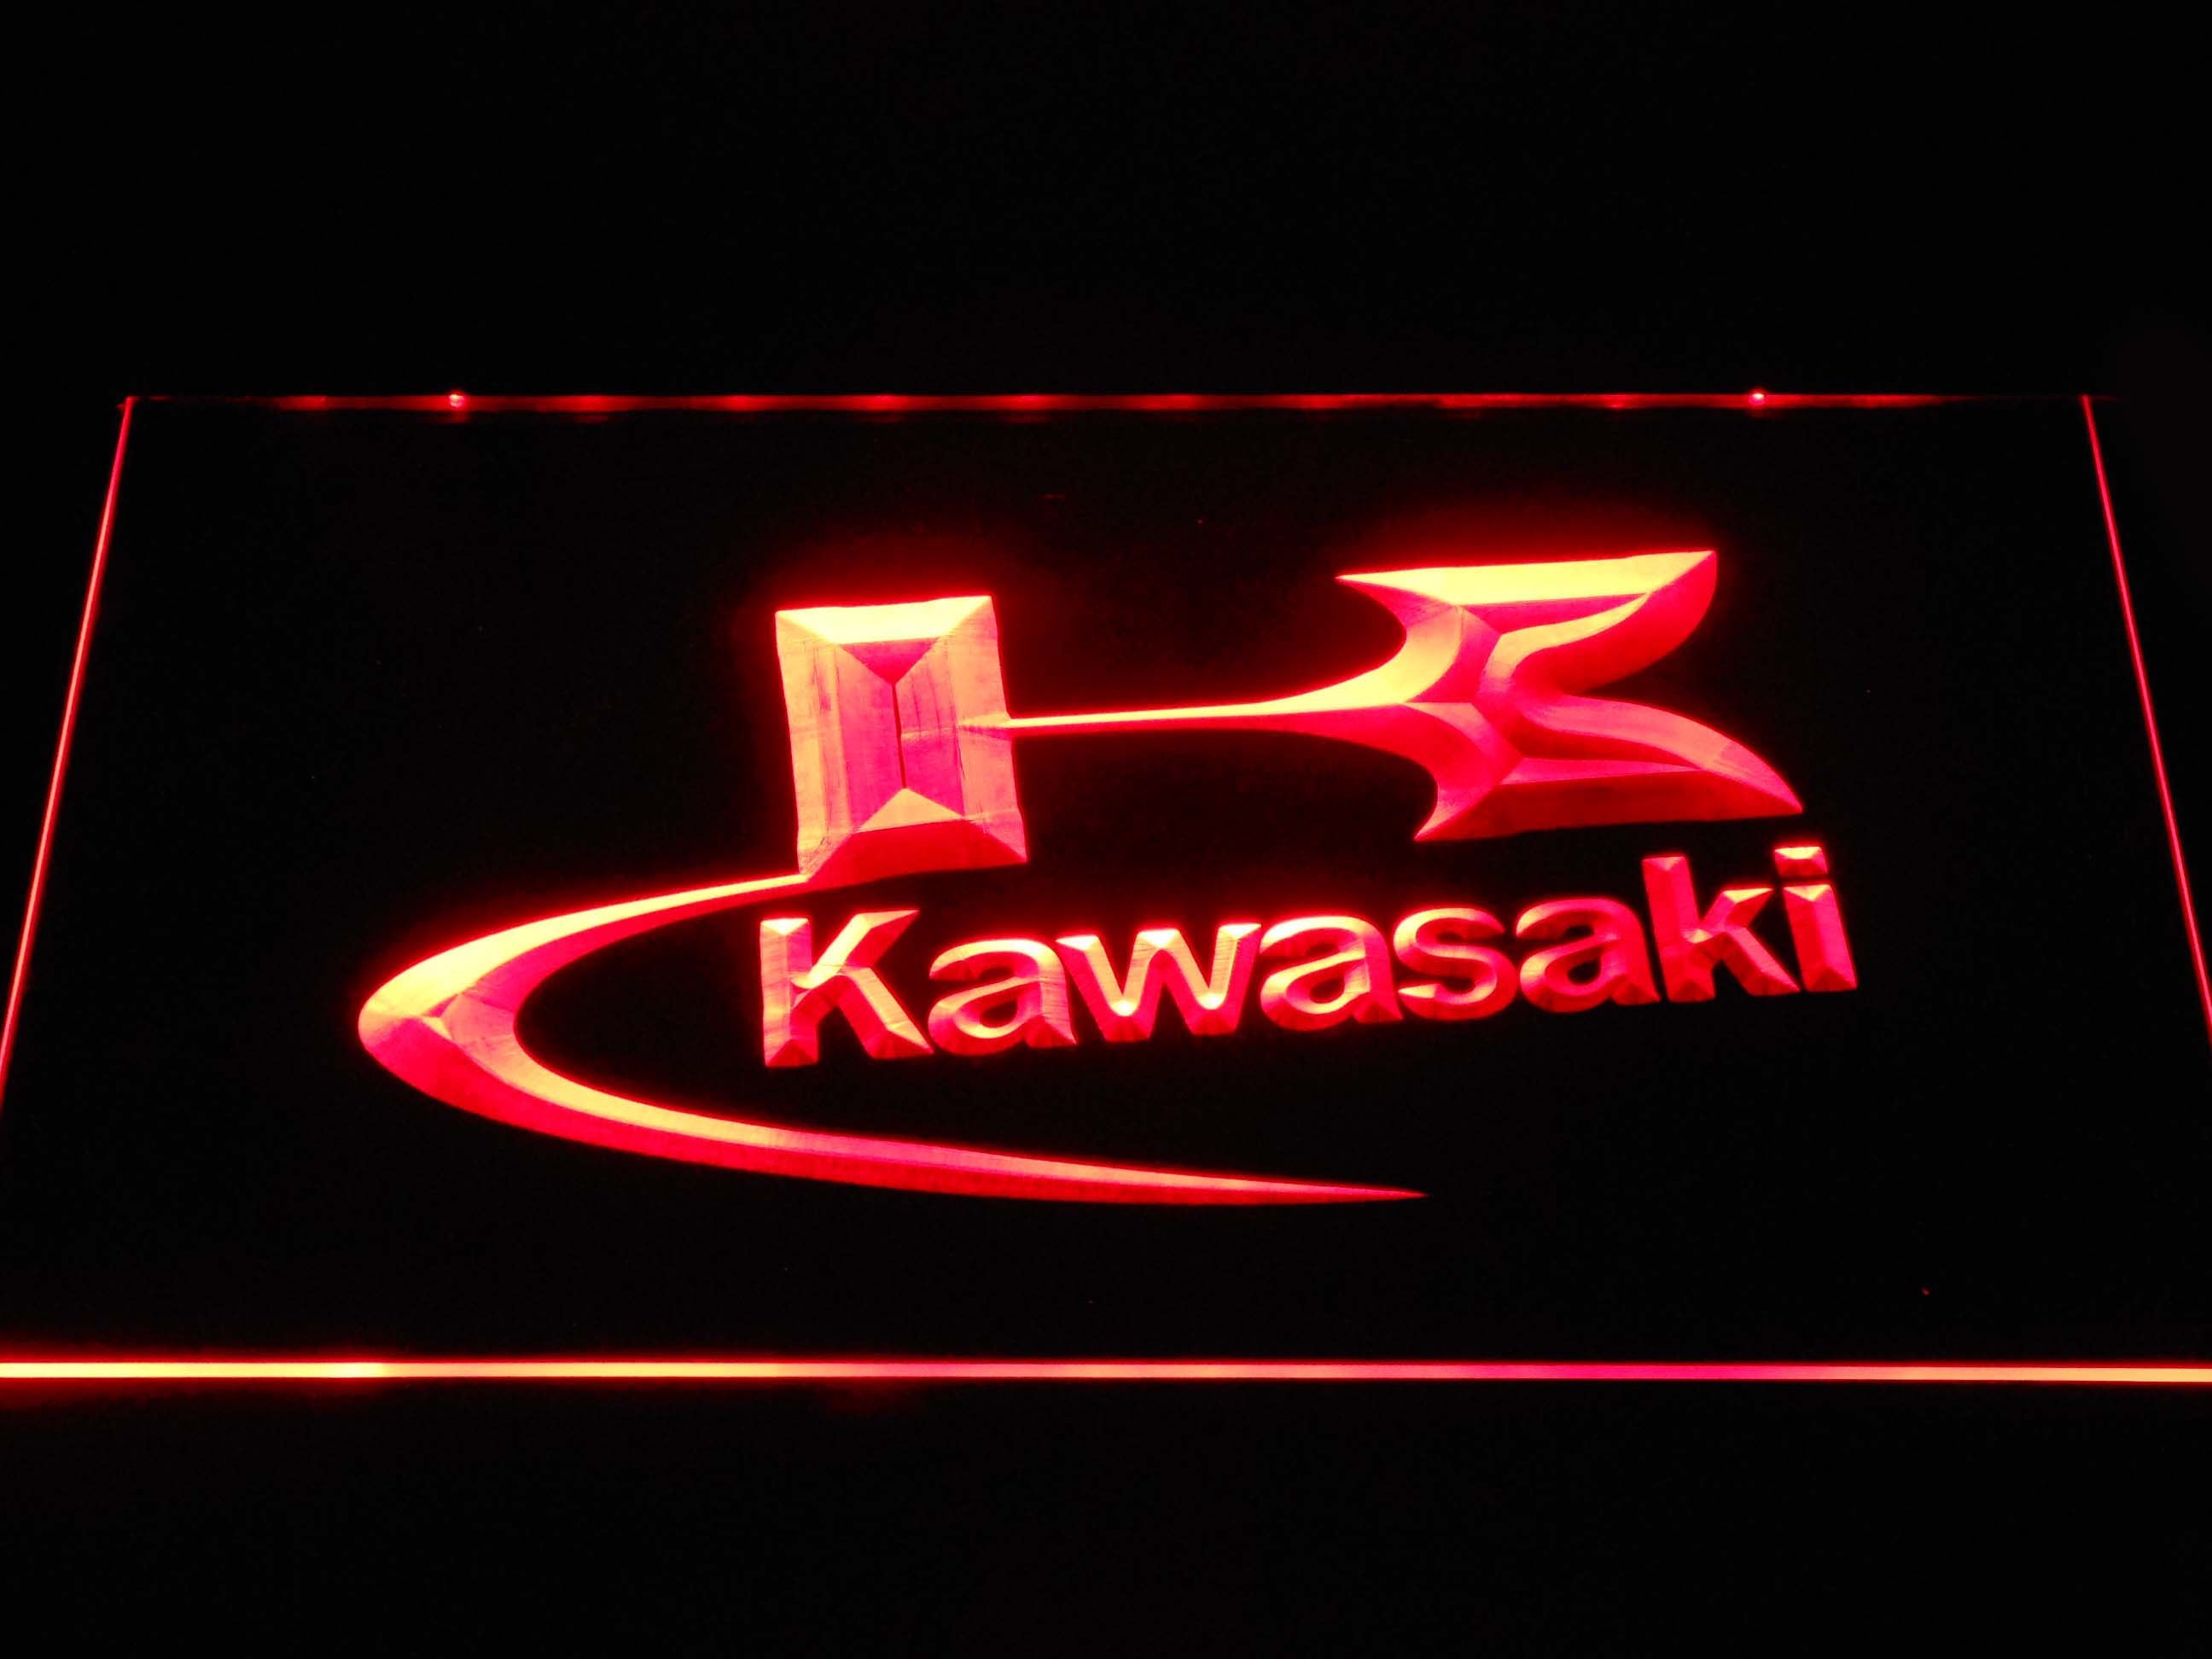 Kawasaki K Mark Neon Light LED Sign